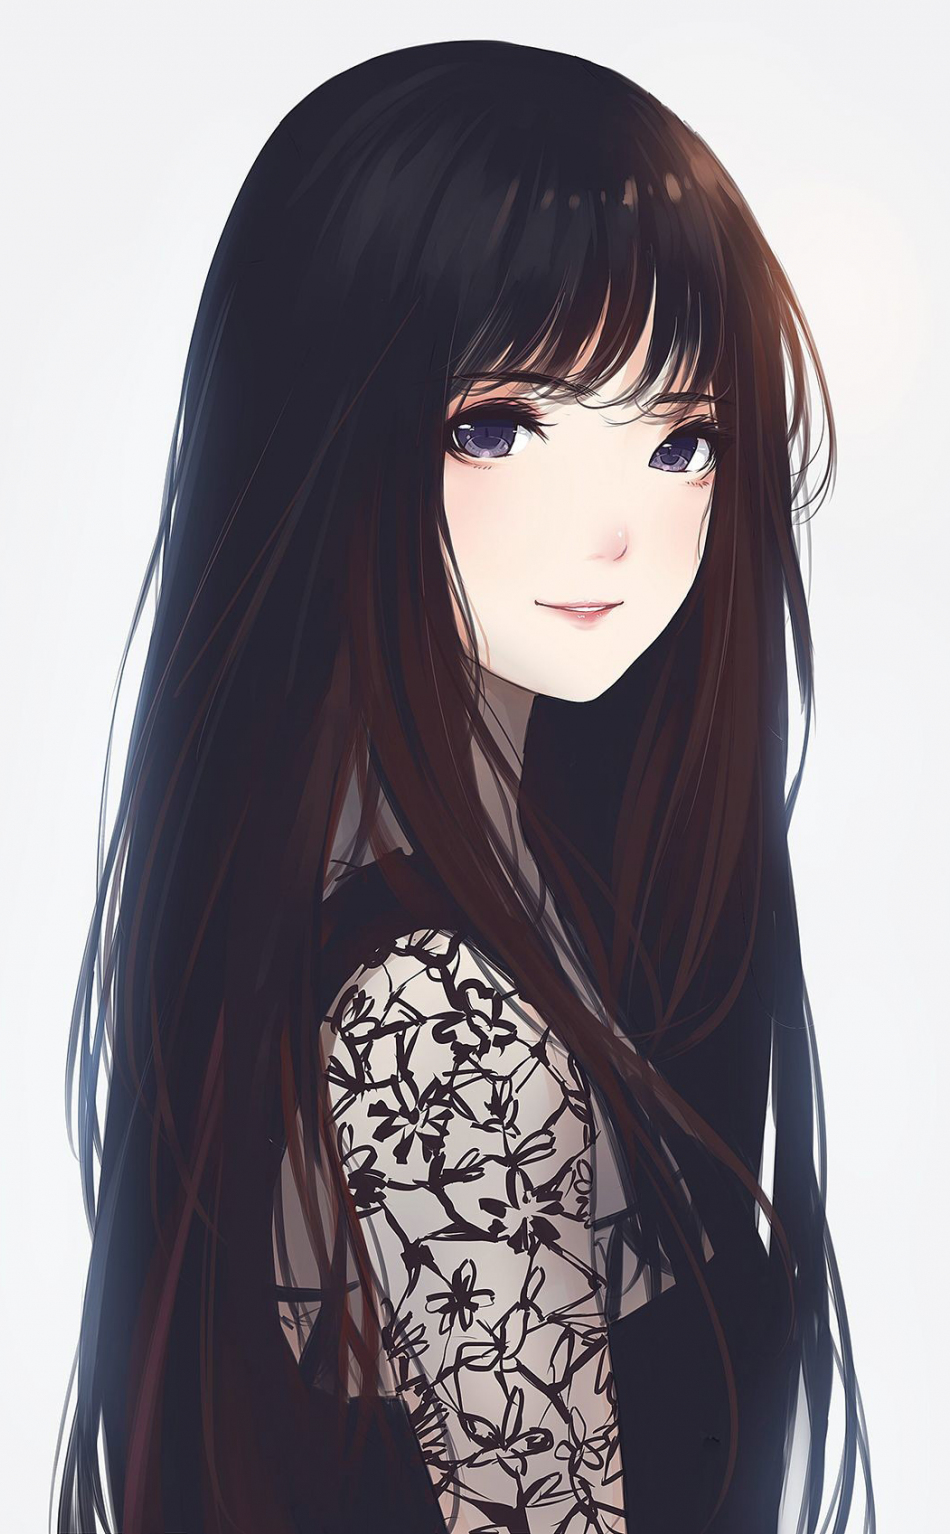 Download 950x1534 wallpaper beautiful, anime girl, artwork, long hair, iphone, 950x1534 HD image, background, 5843